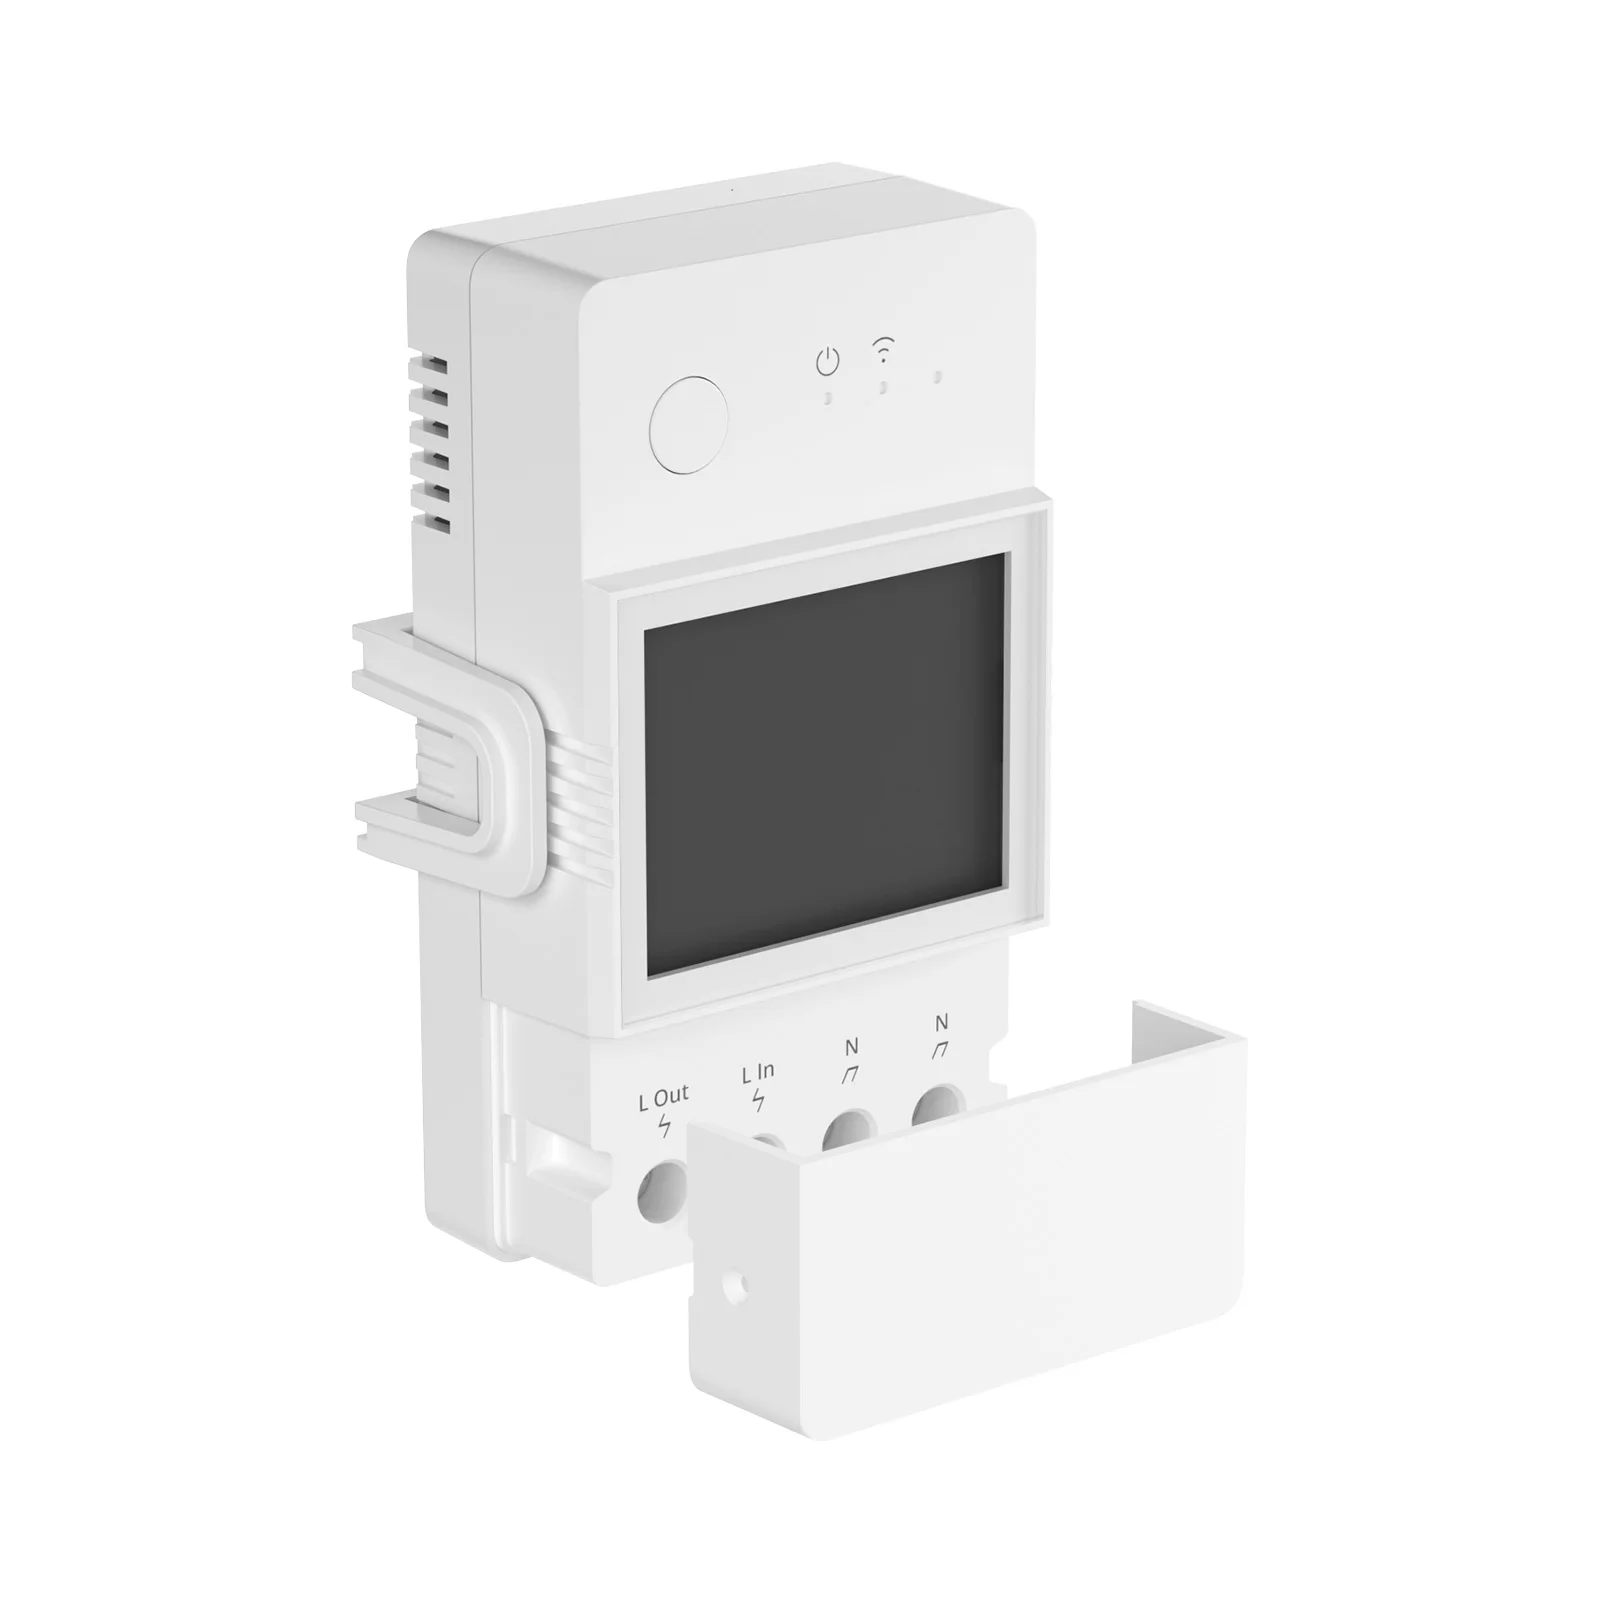 SONOFF THR3 16D Wireless Smart Remote Control APP WIFI Switch